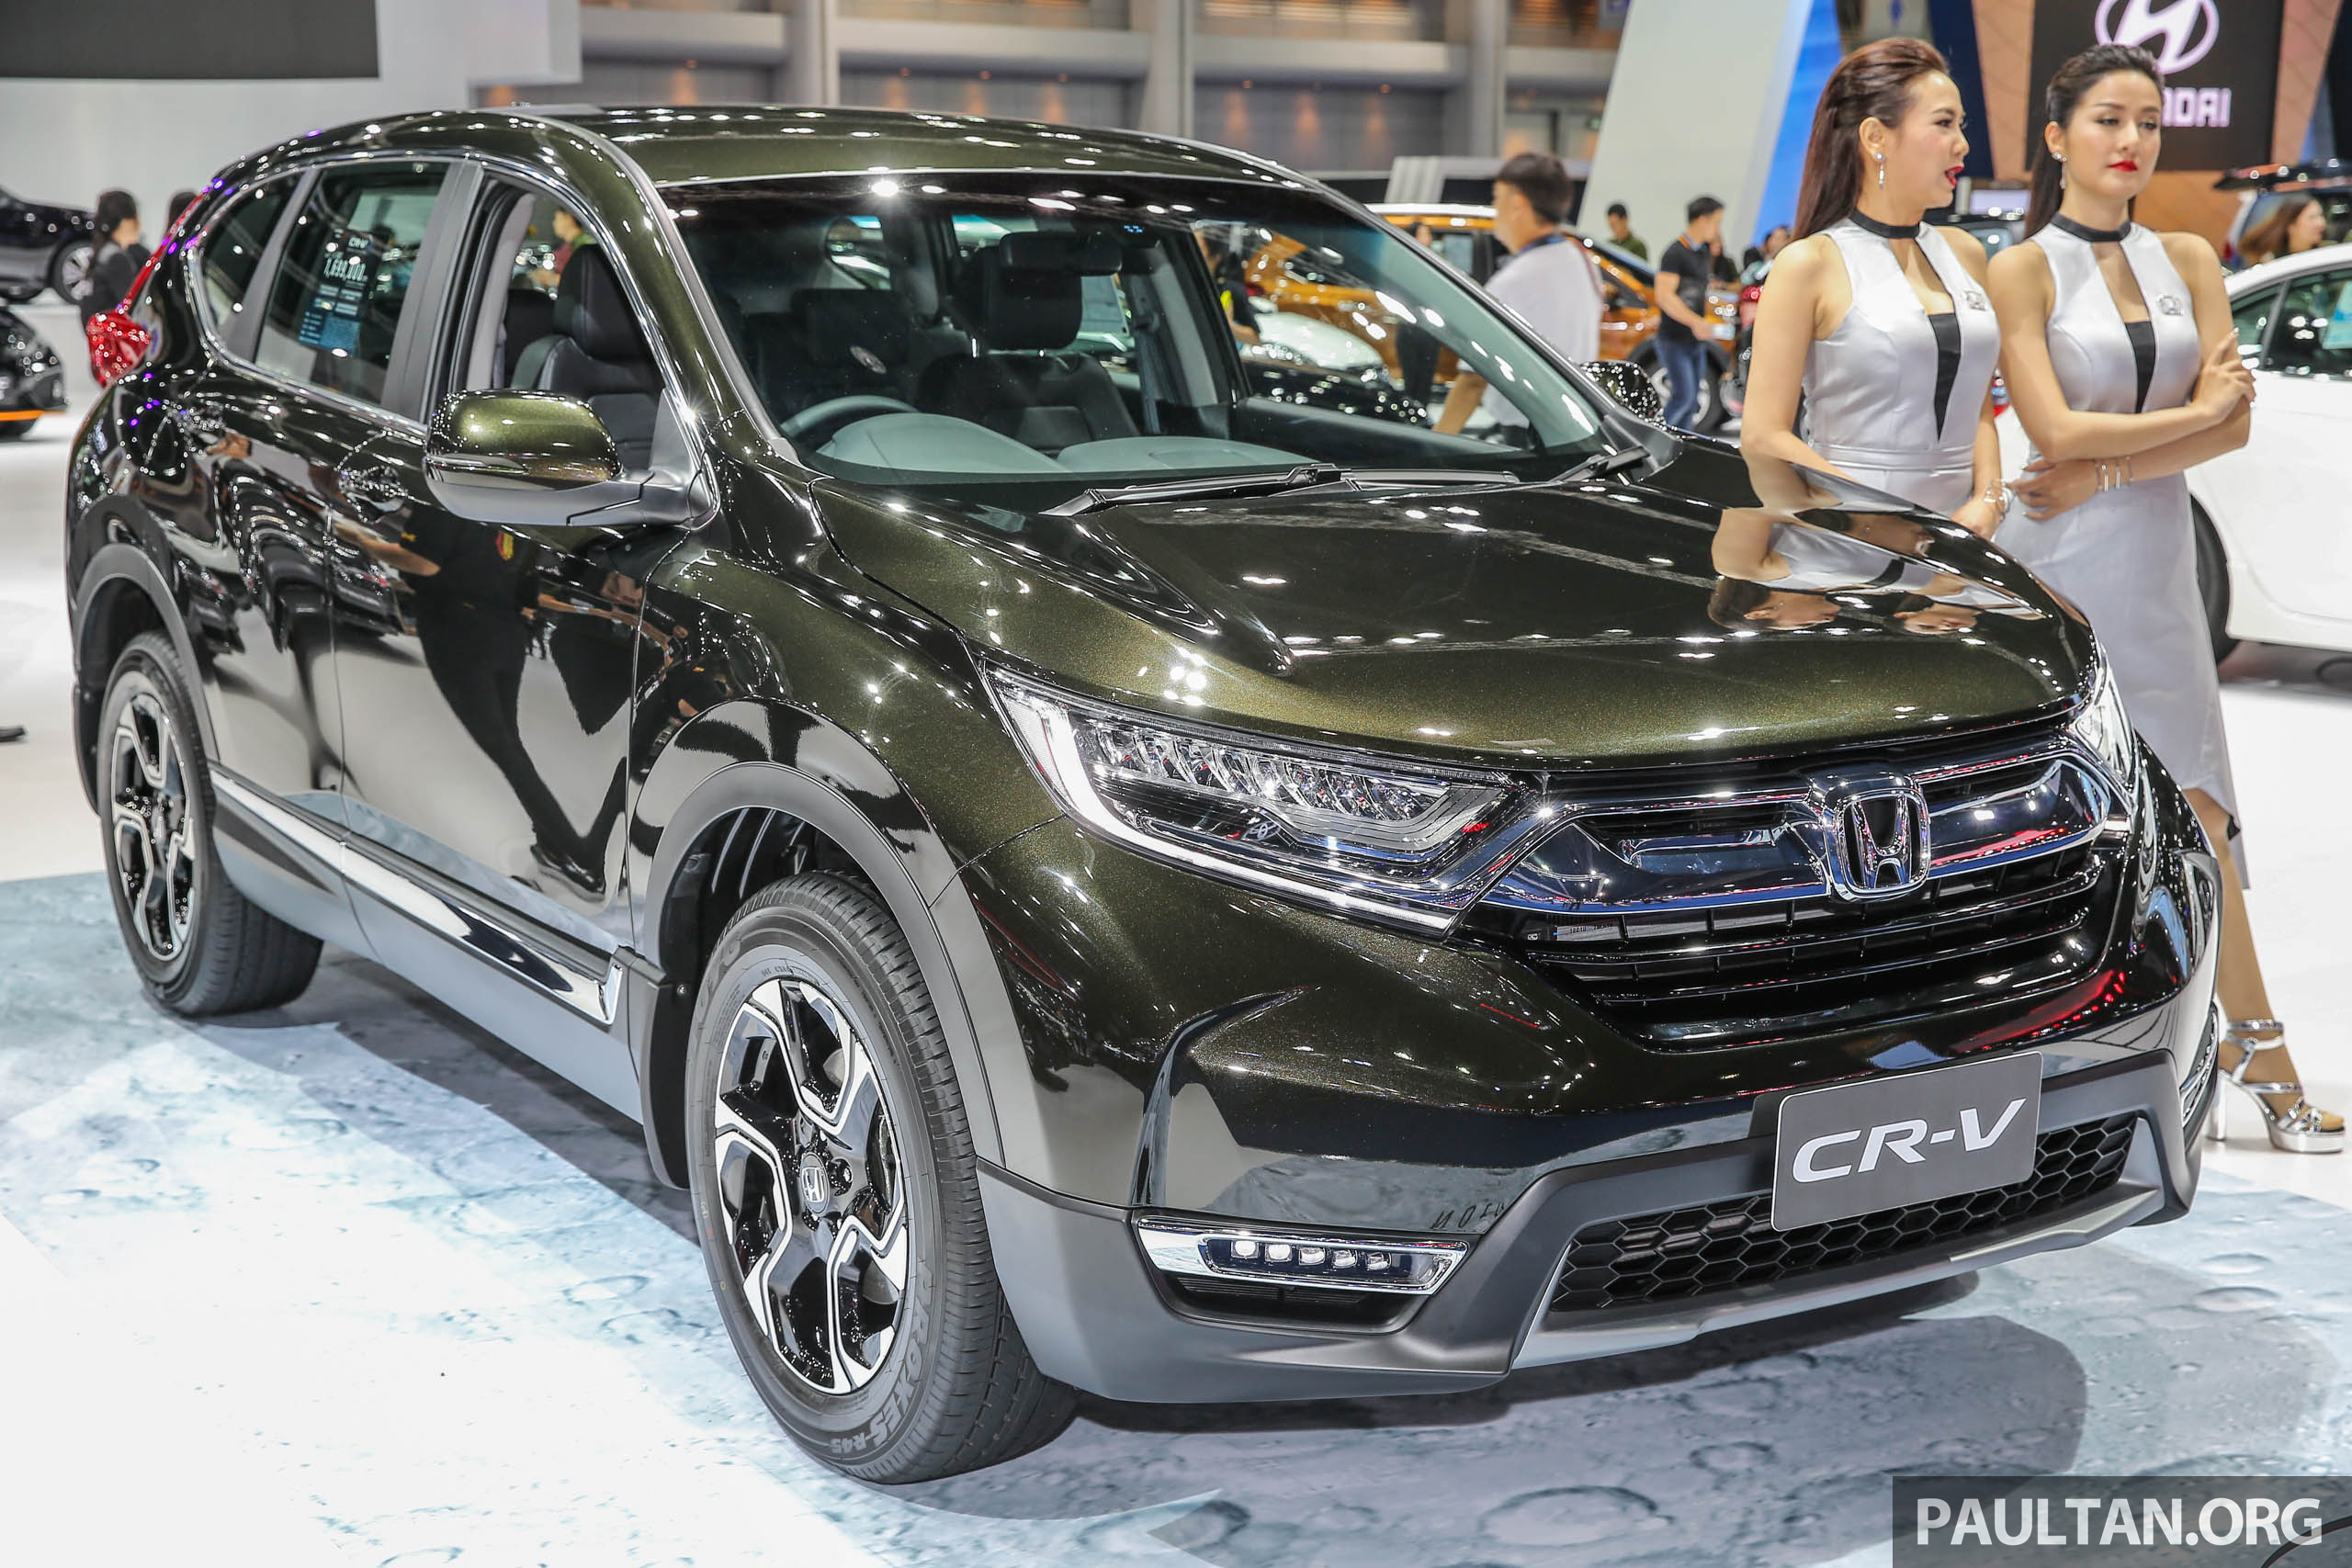 Срв гибрид купить. Honda CR-V 2019. Honda CRV 2019. Гибридный кроссоверы Honda CRV. Honda CR-V 2017.